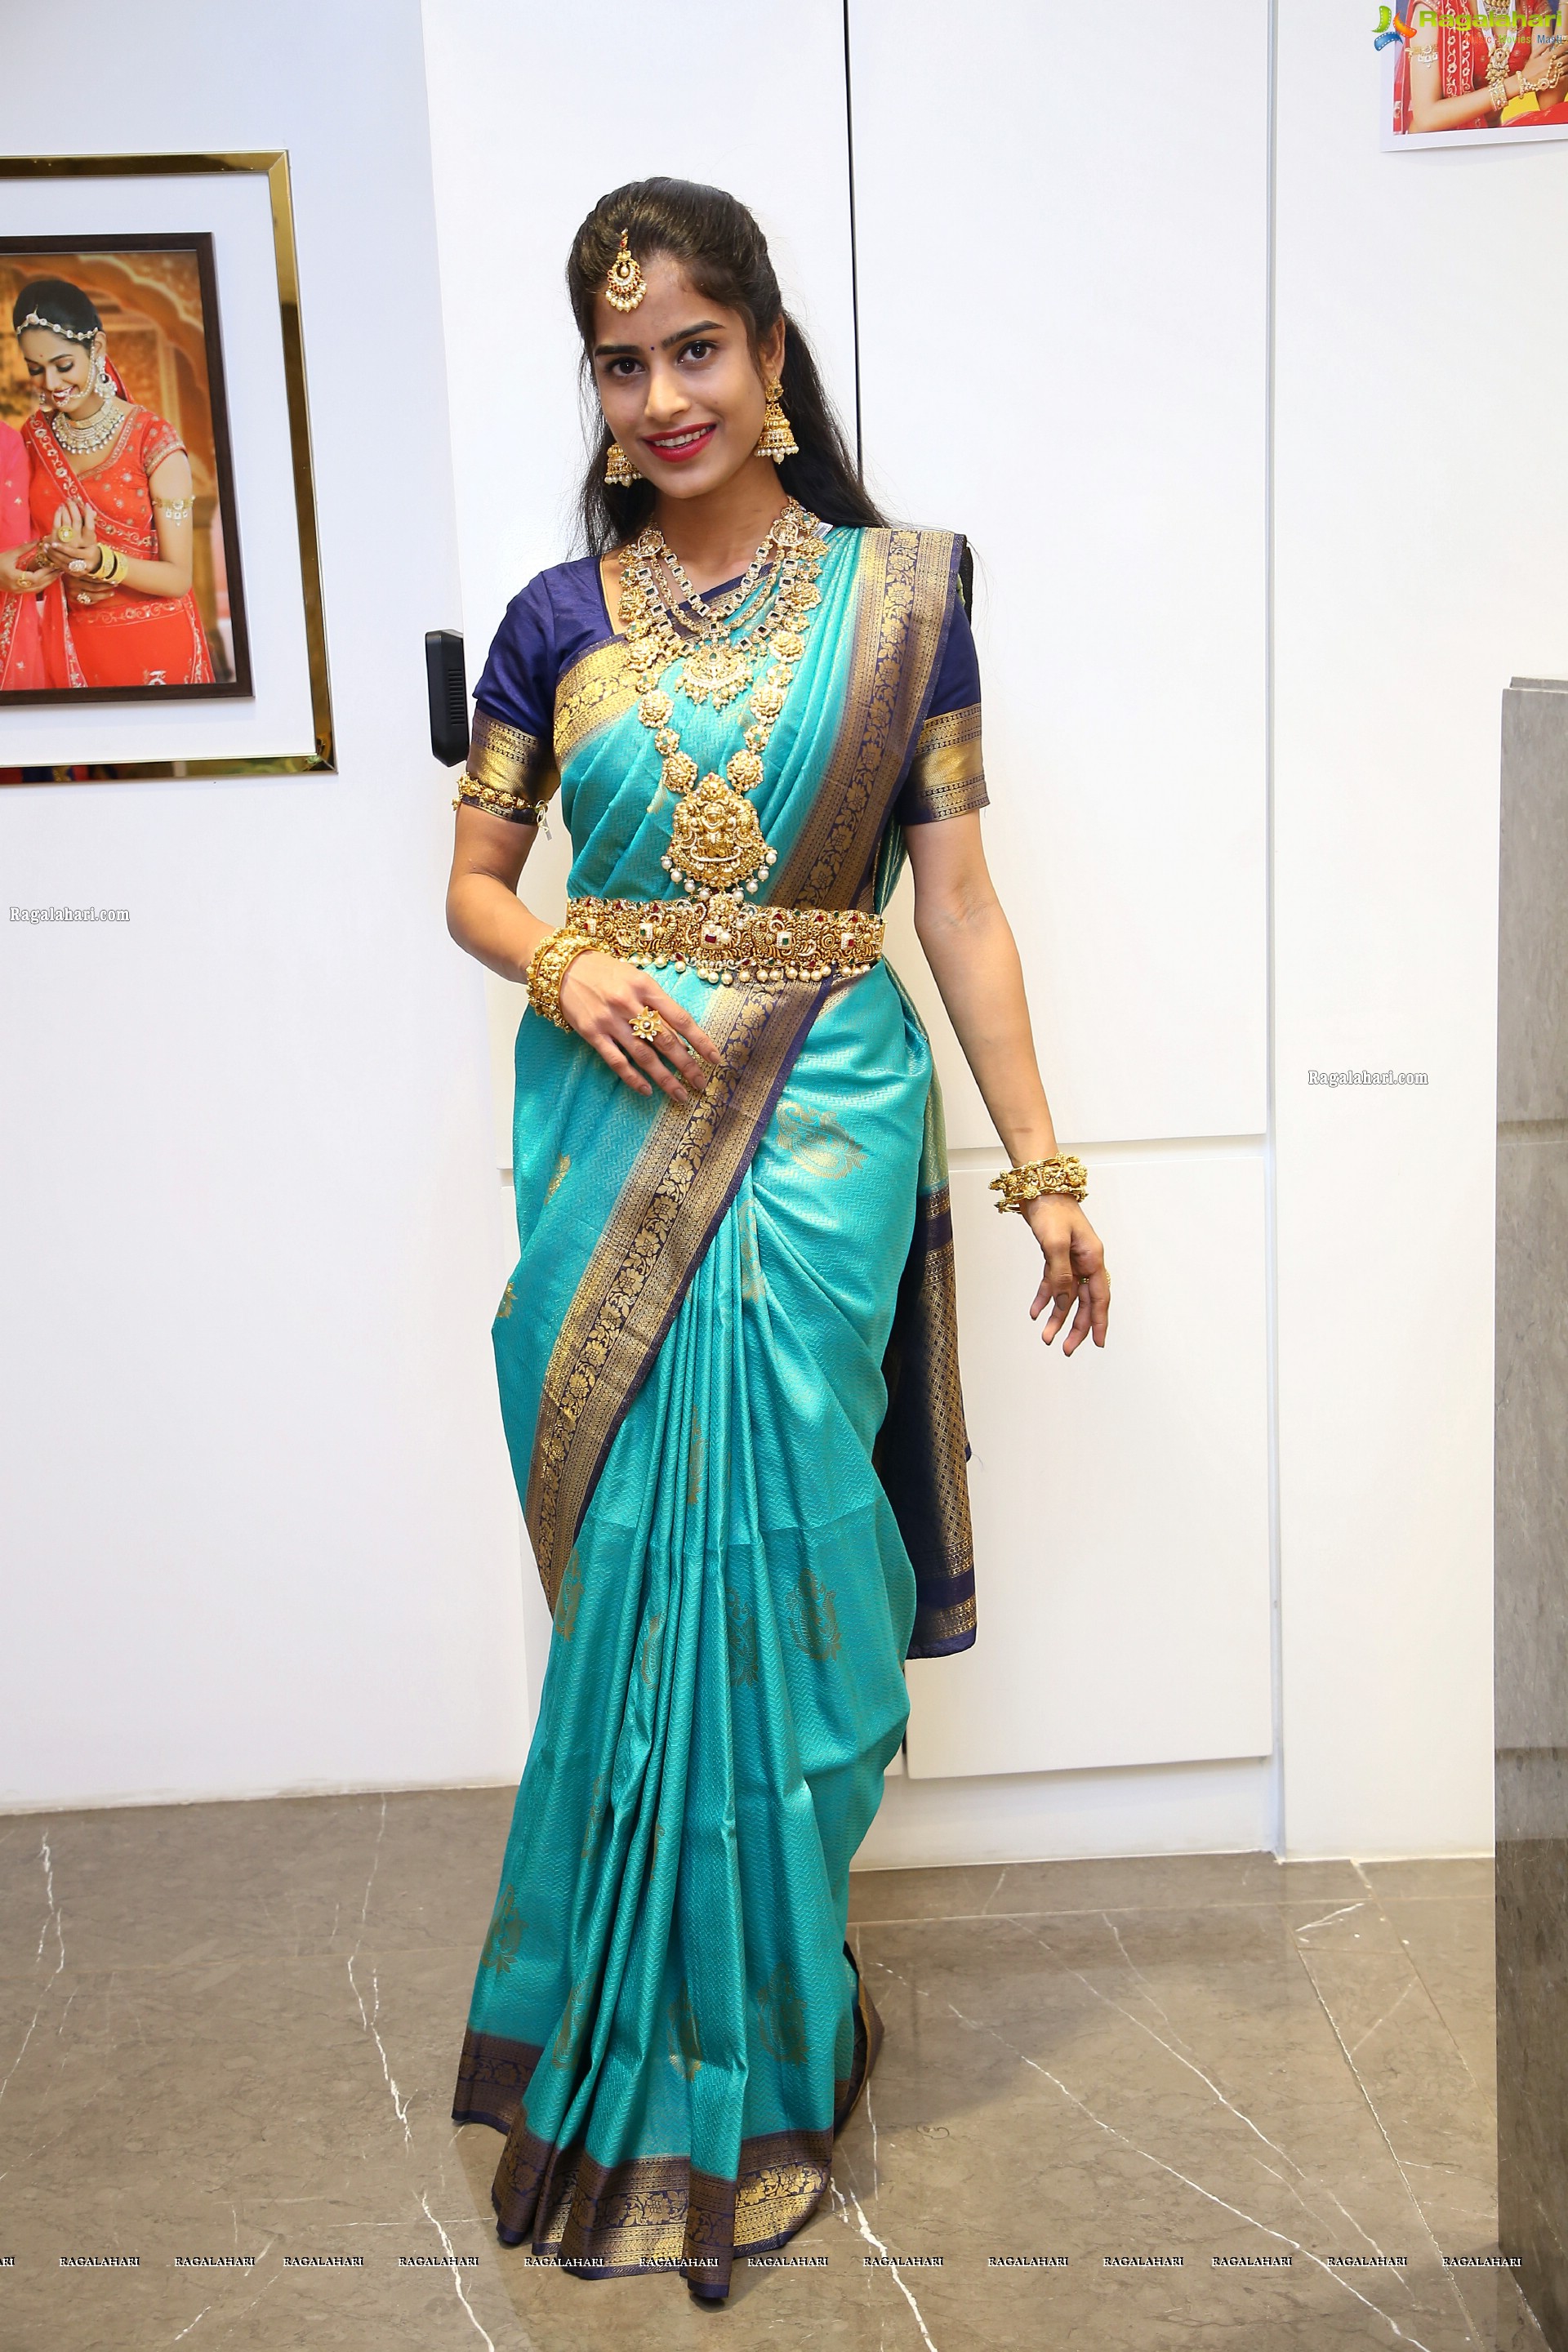 Srilekha in Traditional Jewellery, HD photo Gallery